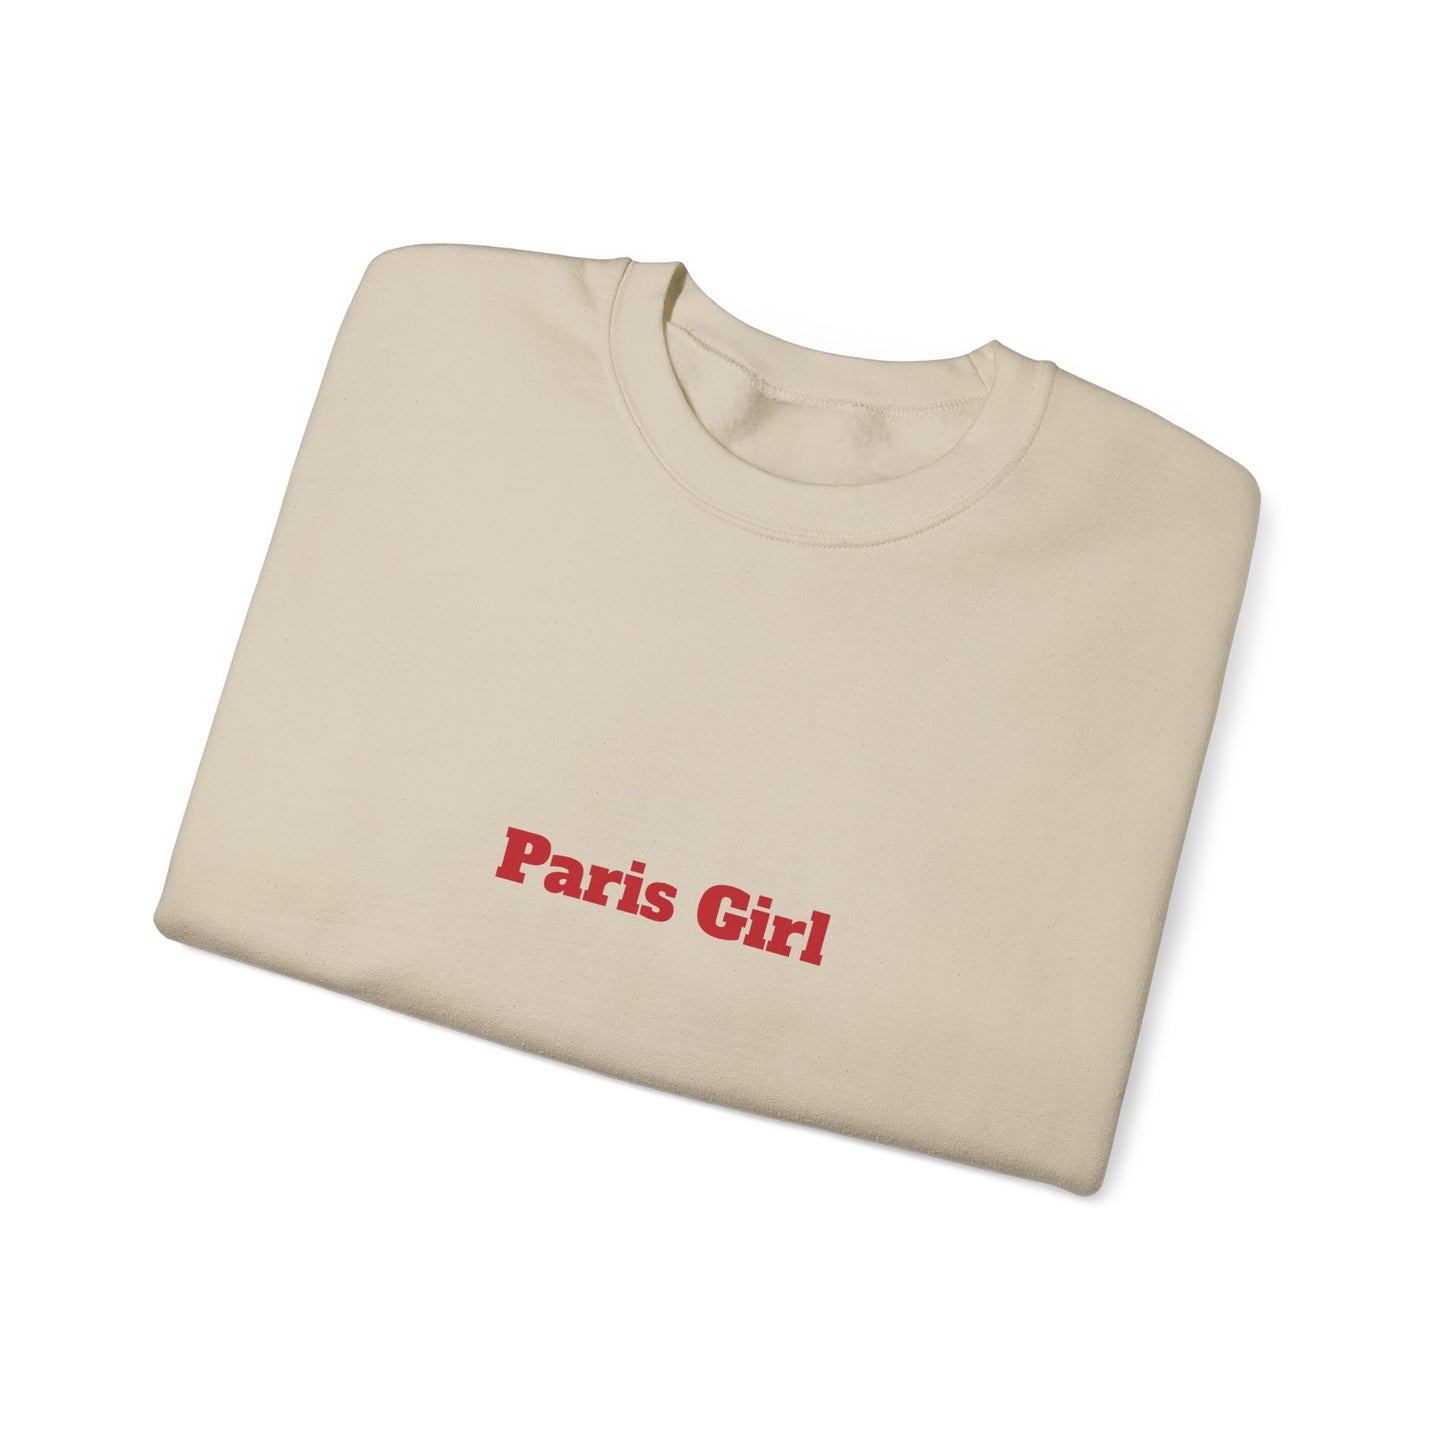 Paris Girl Sweatshirt (Unisex)